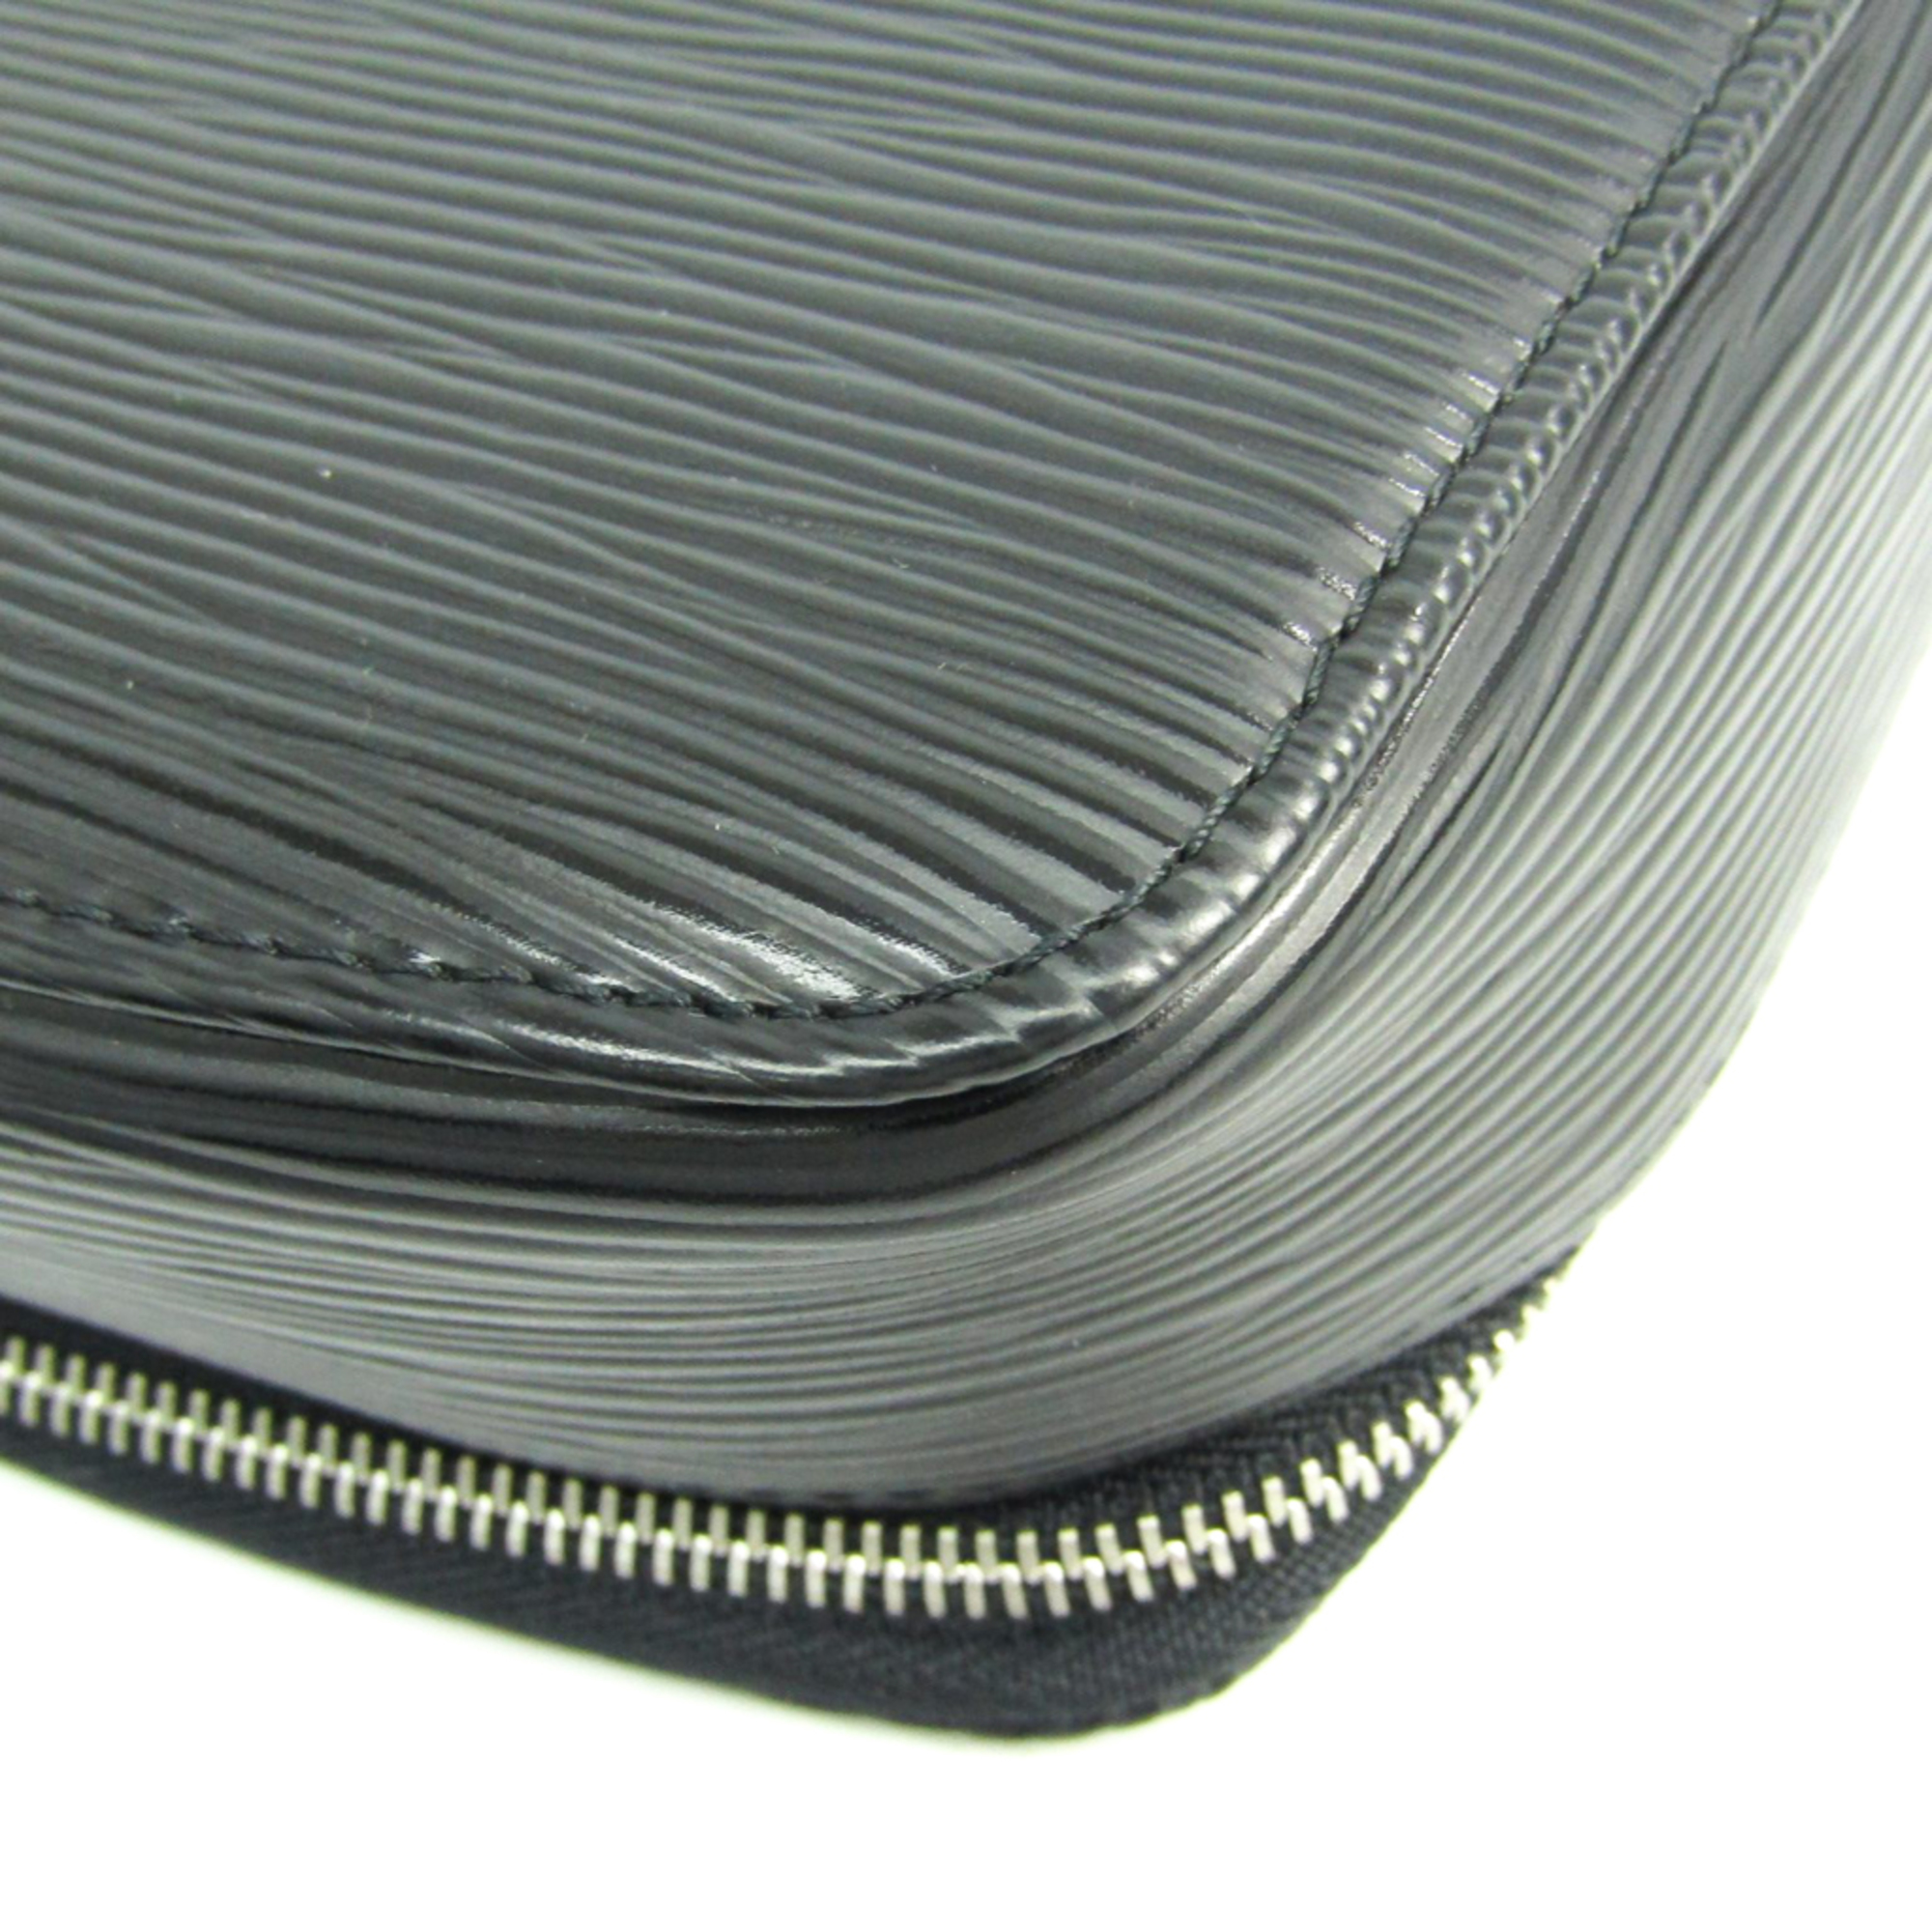 Louis Vuitton Epi Jewelry Case Poche Monte-Carlo M48362 Noir Epi leather